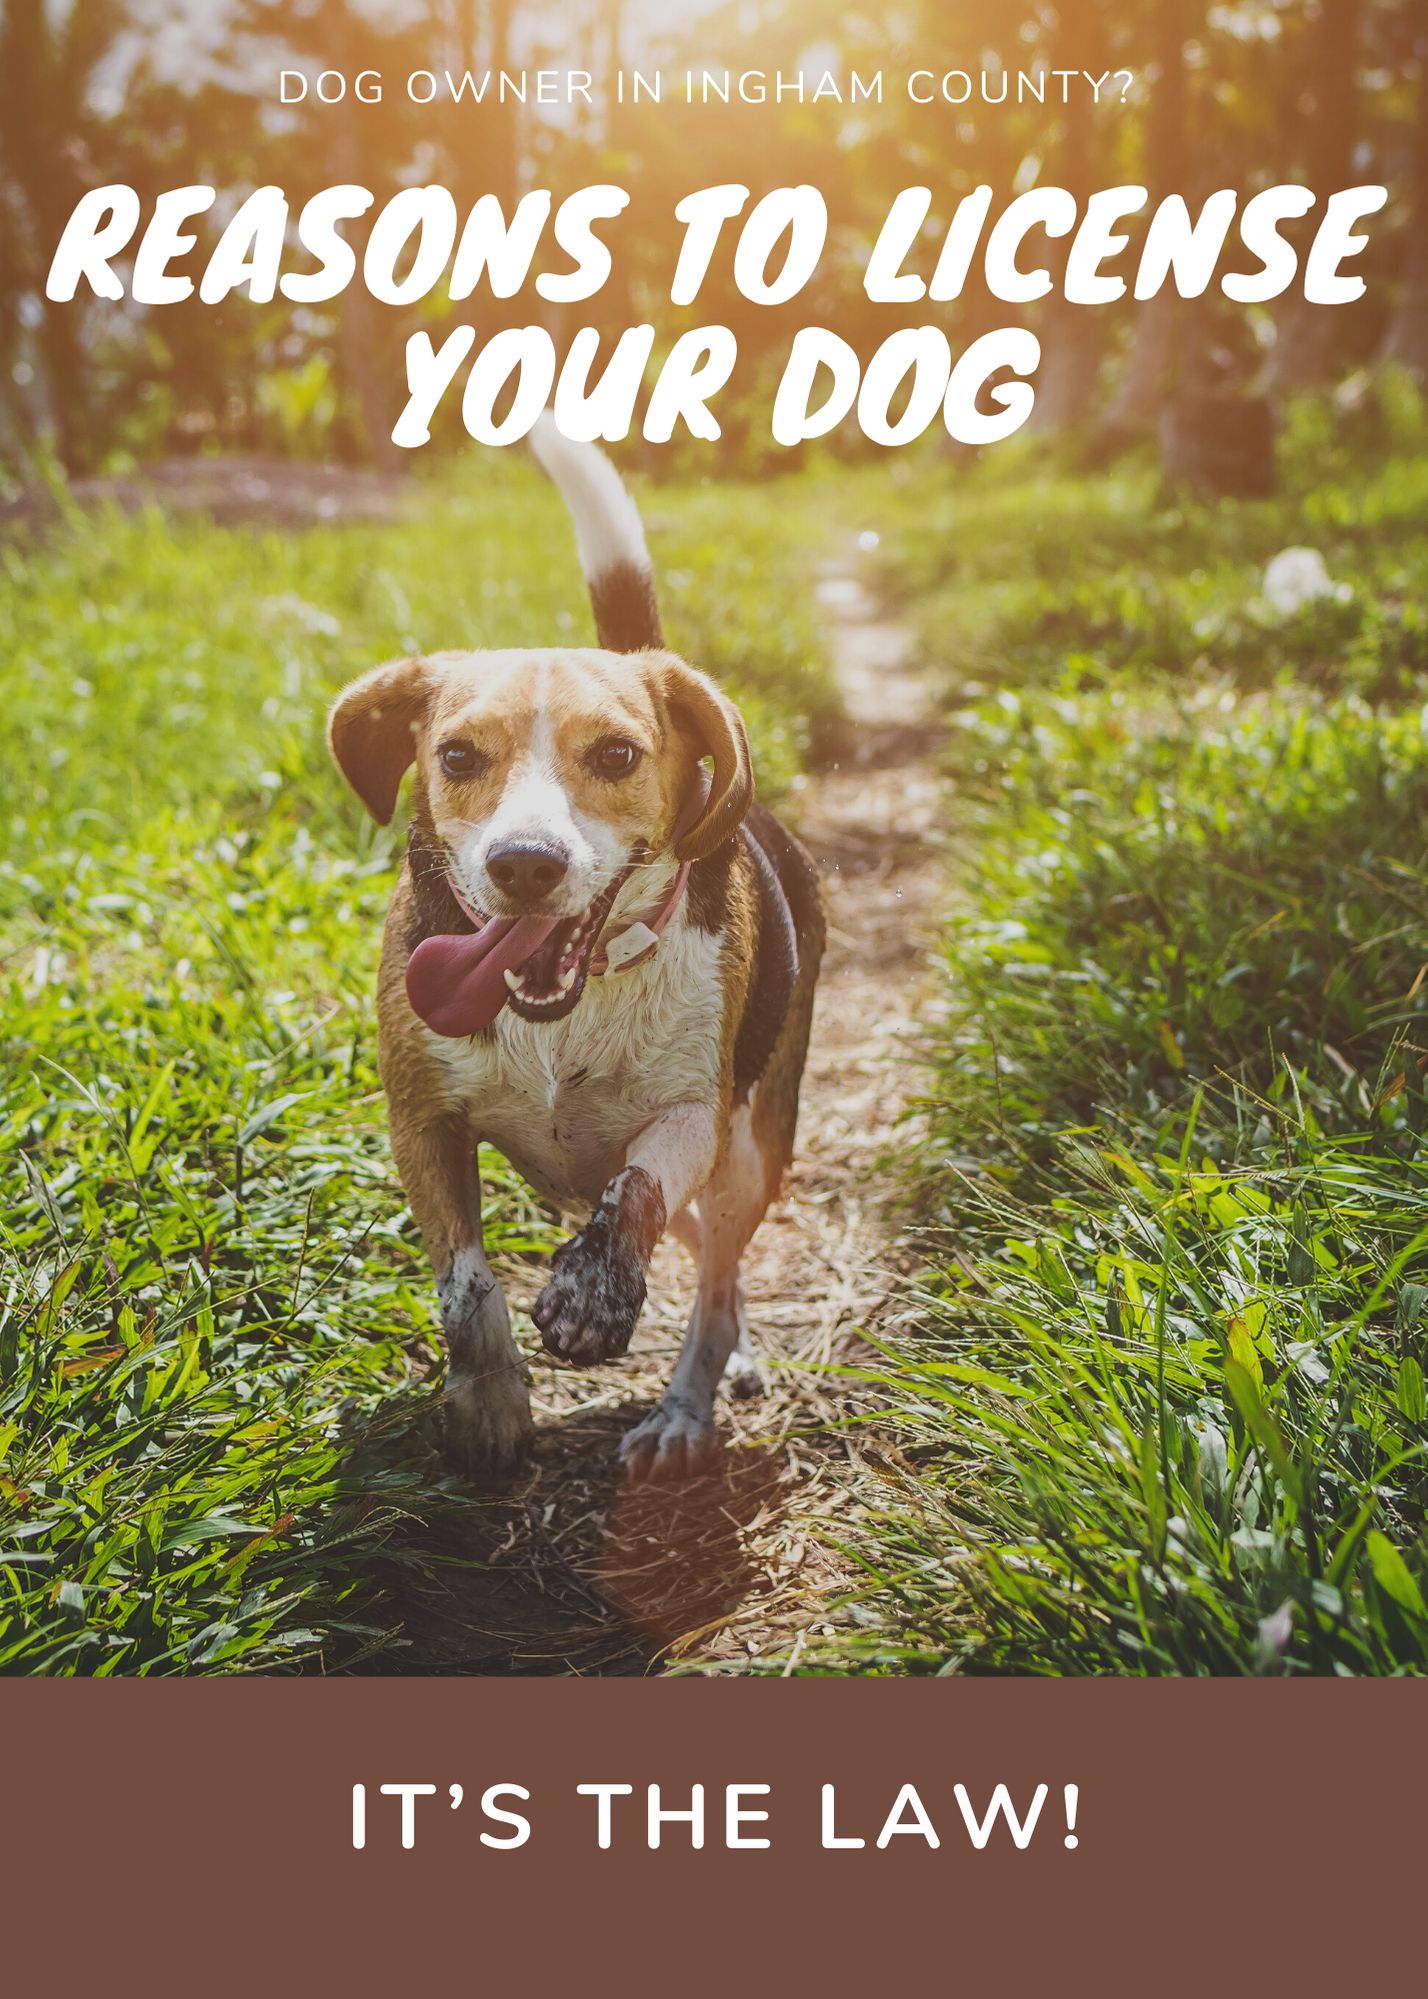 Ingham County Dog License Poster